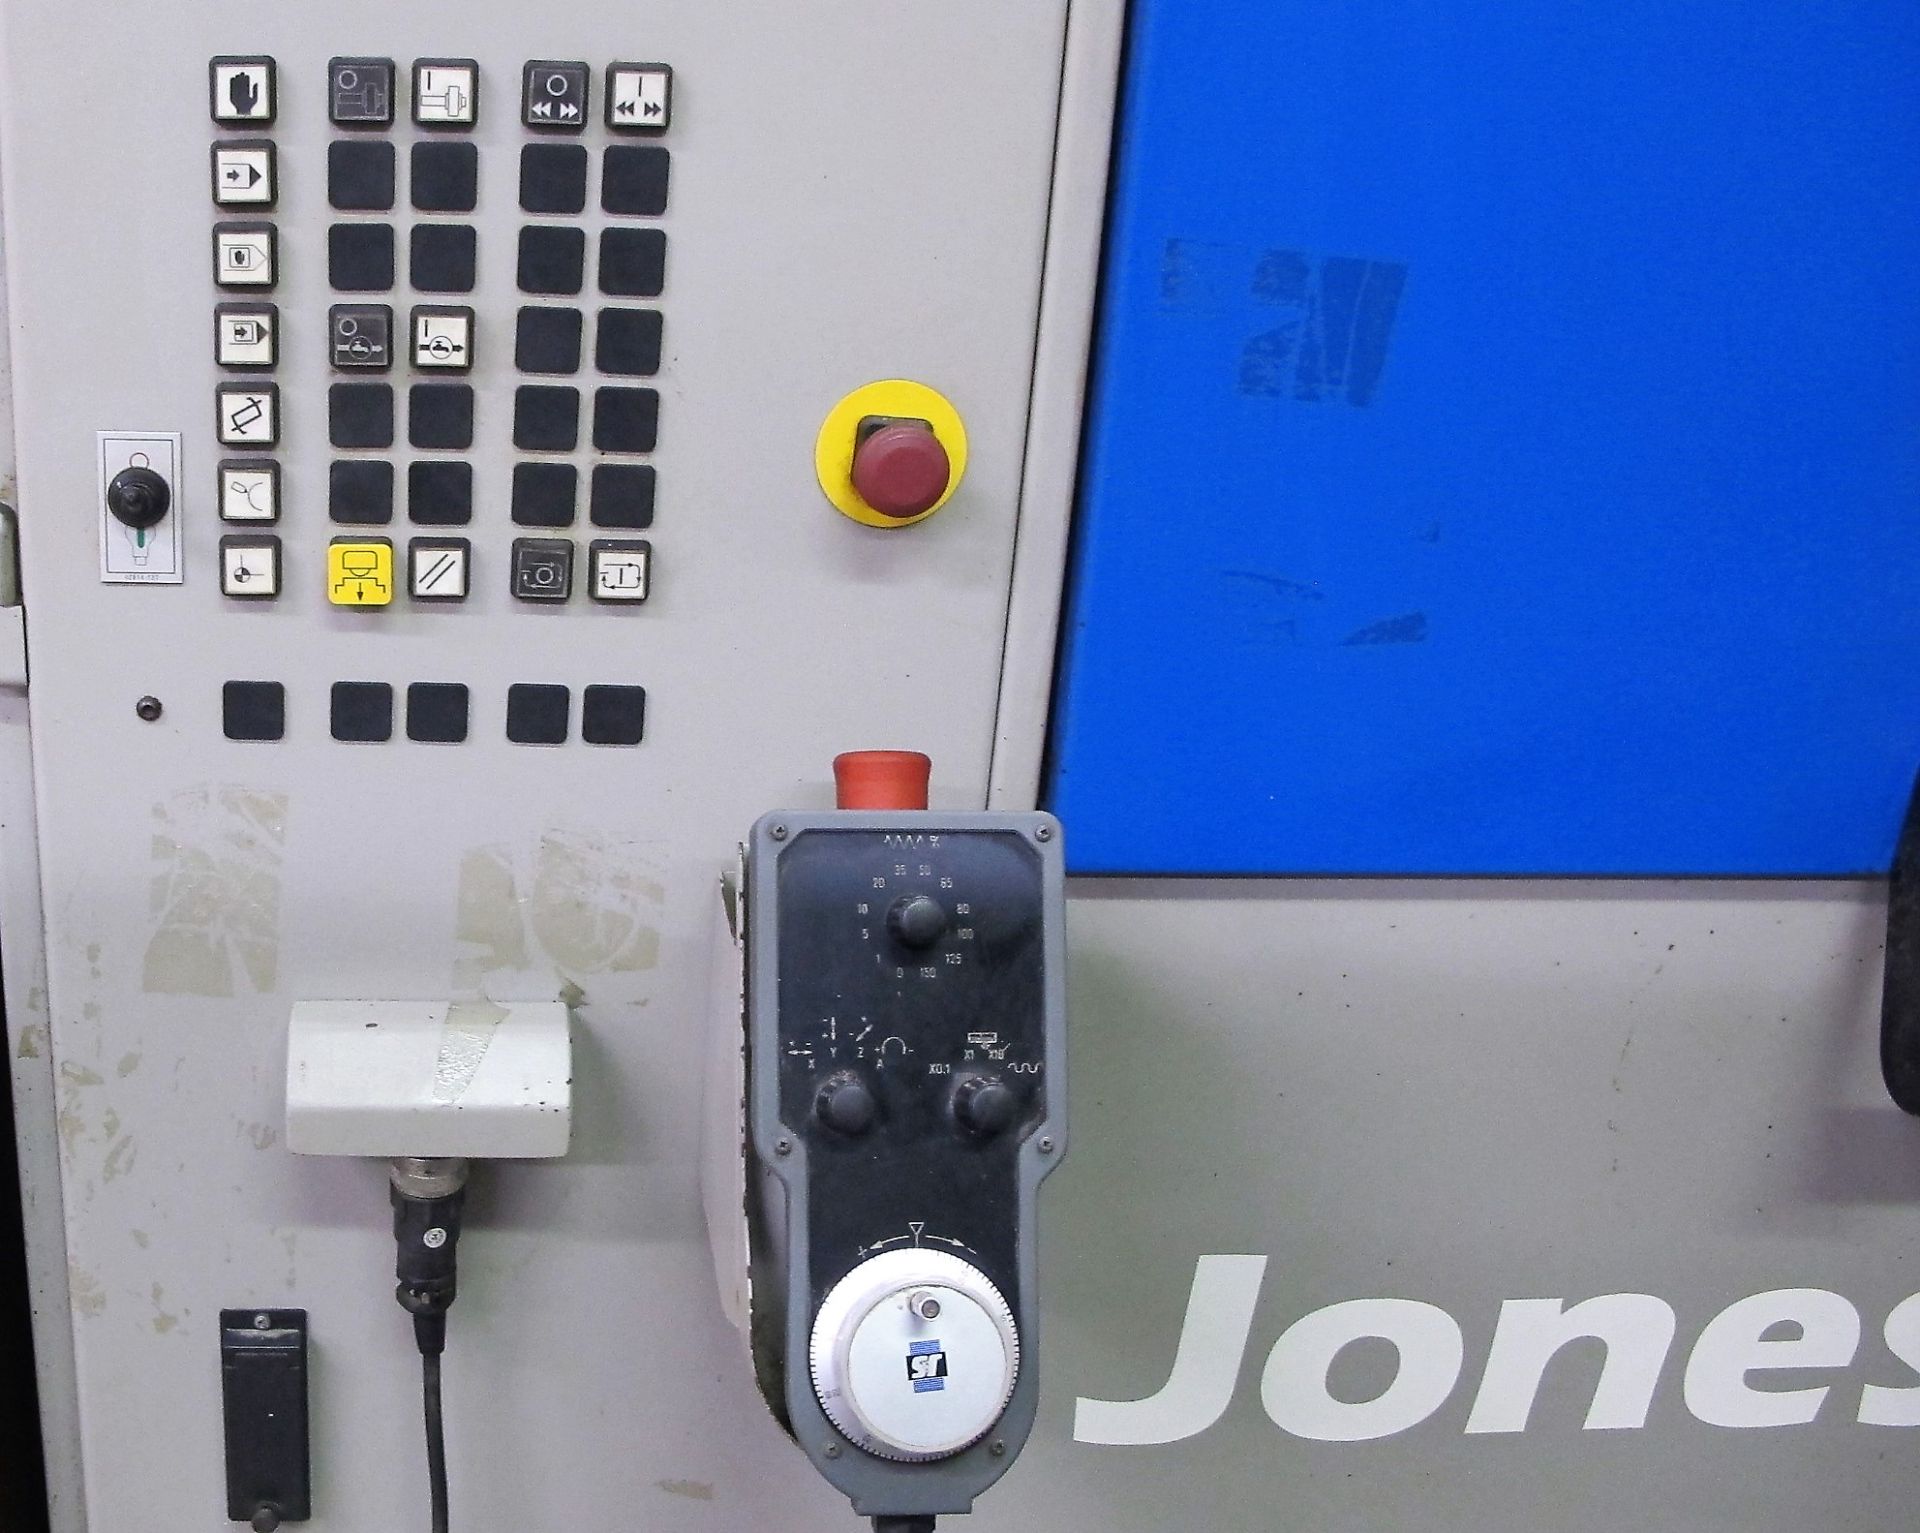 JONES & SHIPMAN Dominator 624 CNC 4-Axis Creep Feed Grinder, GE Fanuc Series 210i-M Control - Image 6 of 13